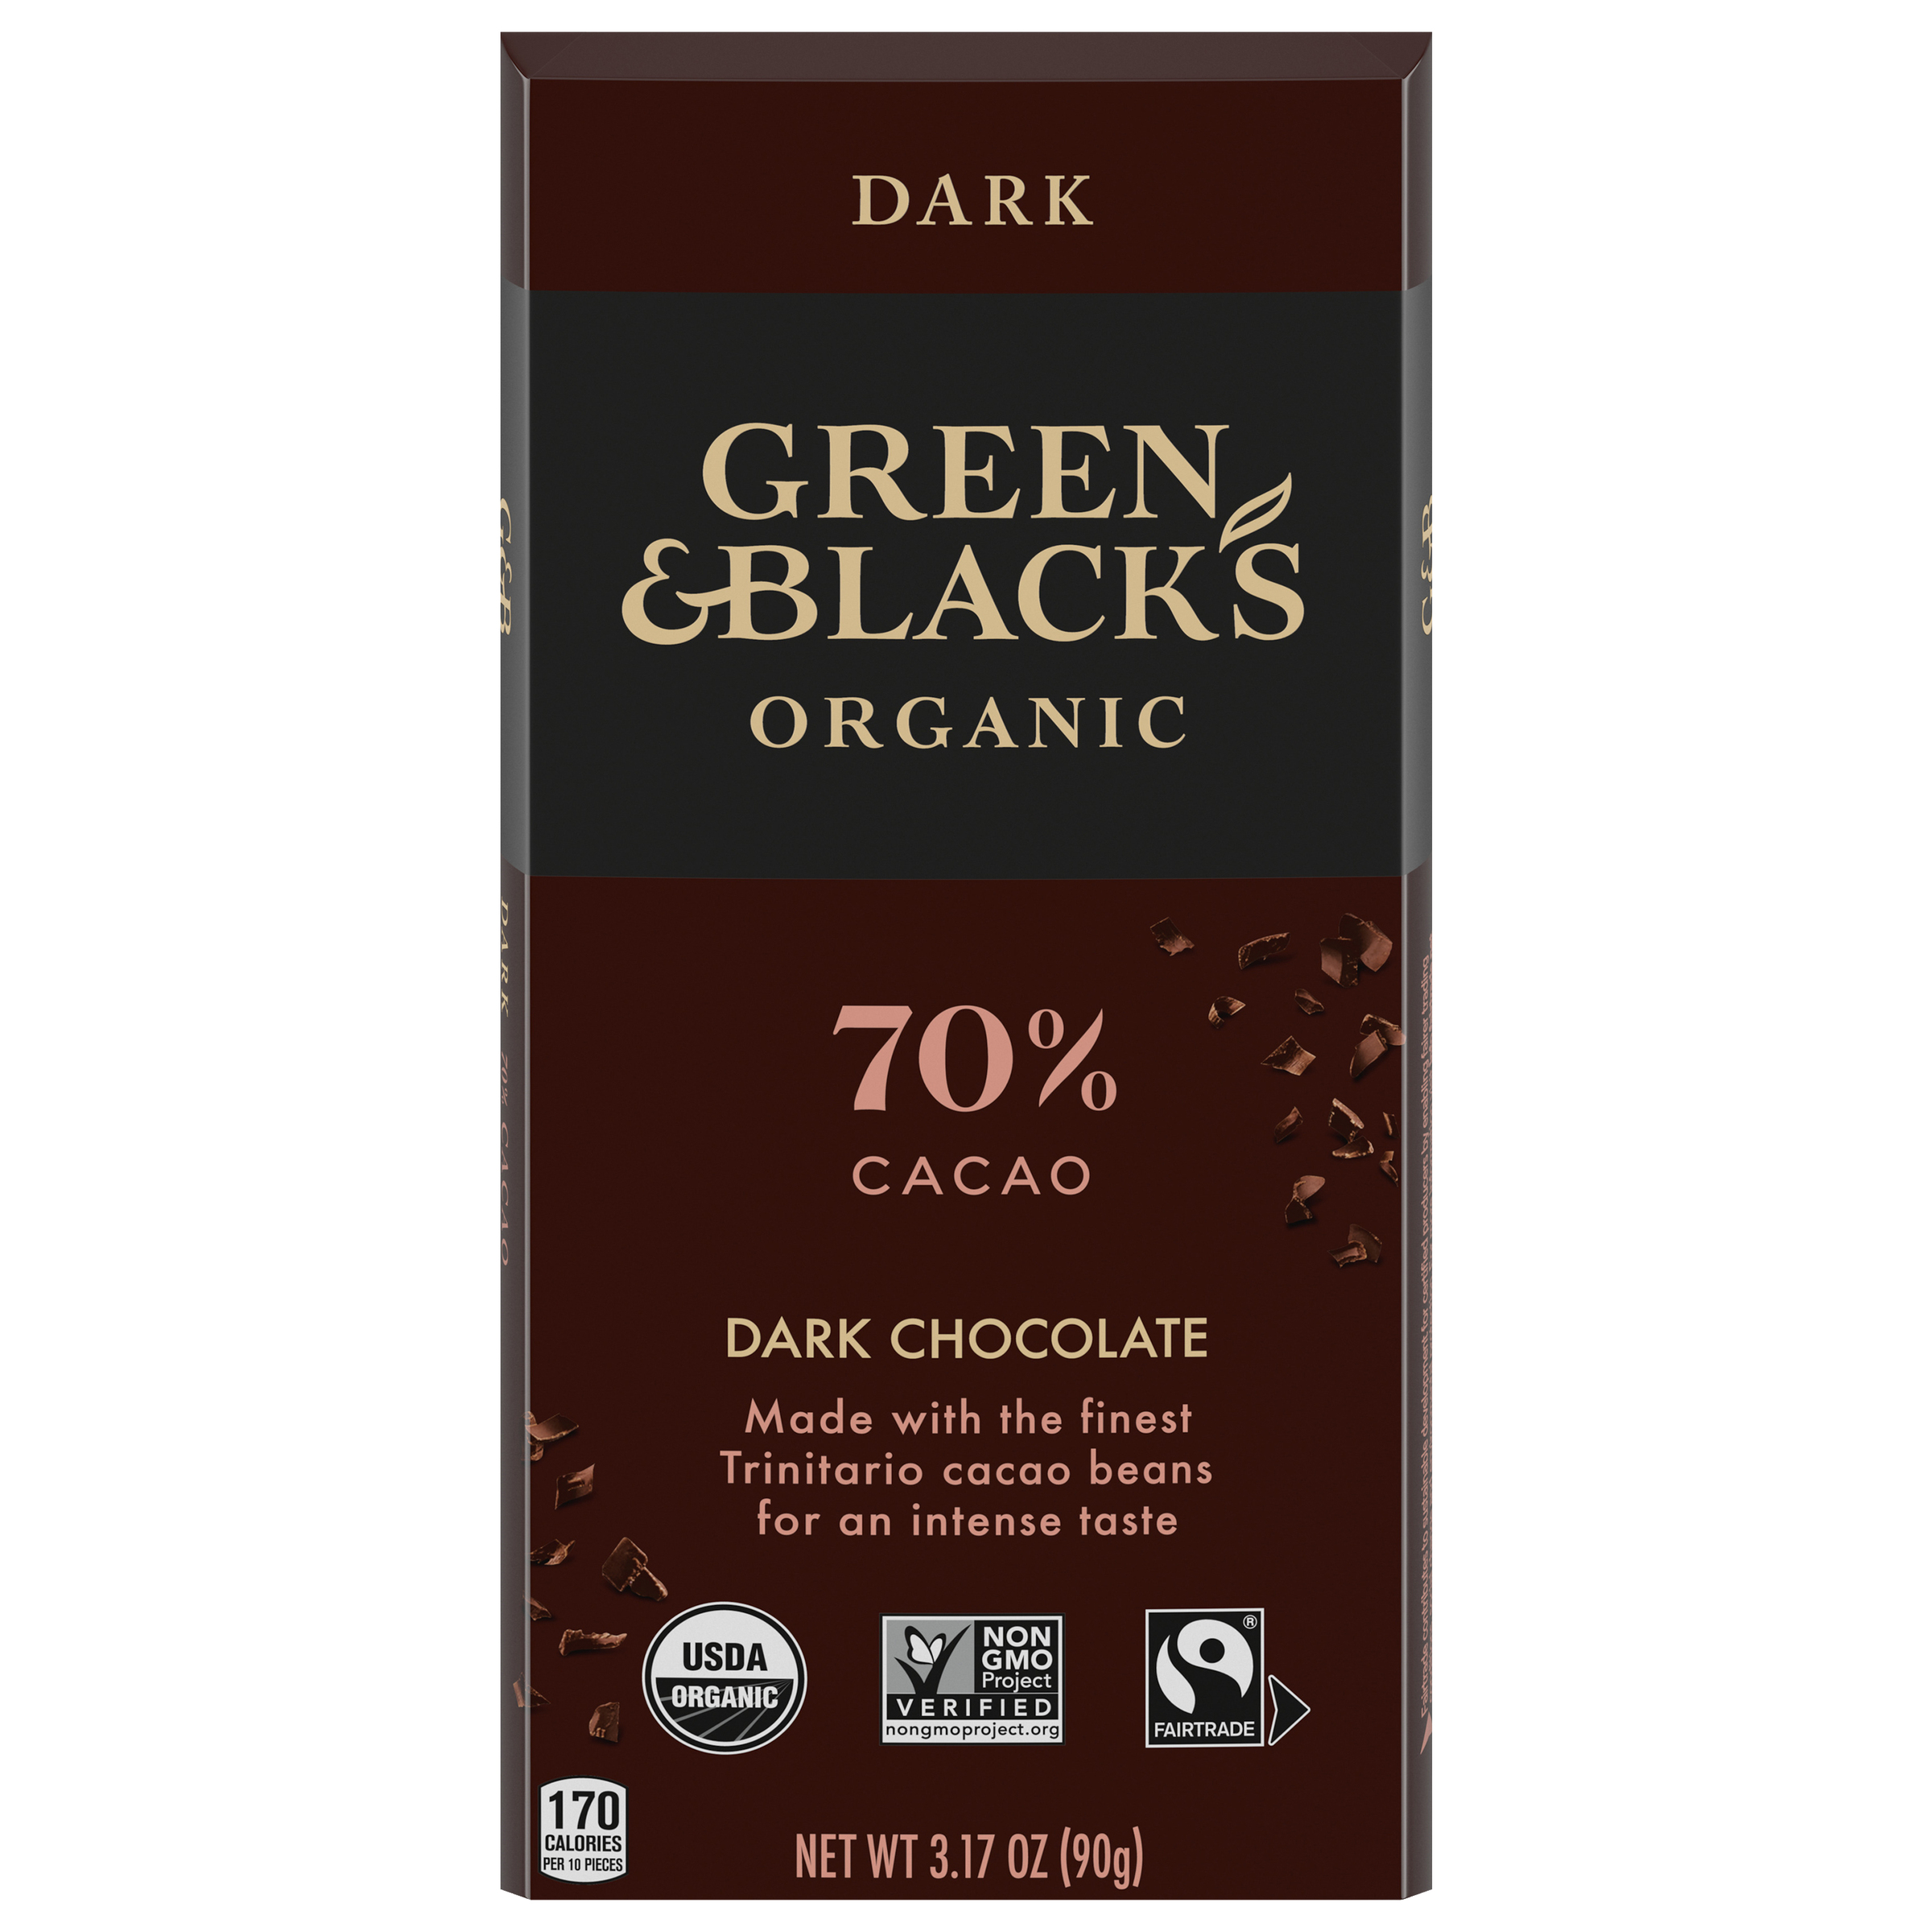 Green & Black's Organic Dark Chocolate Bar, 70% Cacao, 3.17 oz